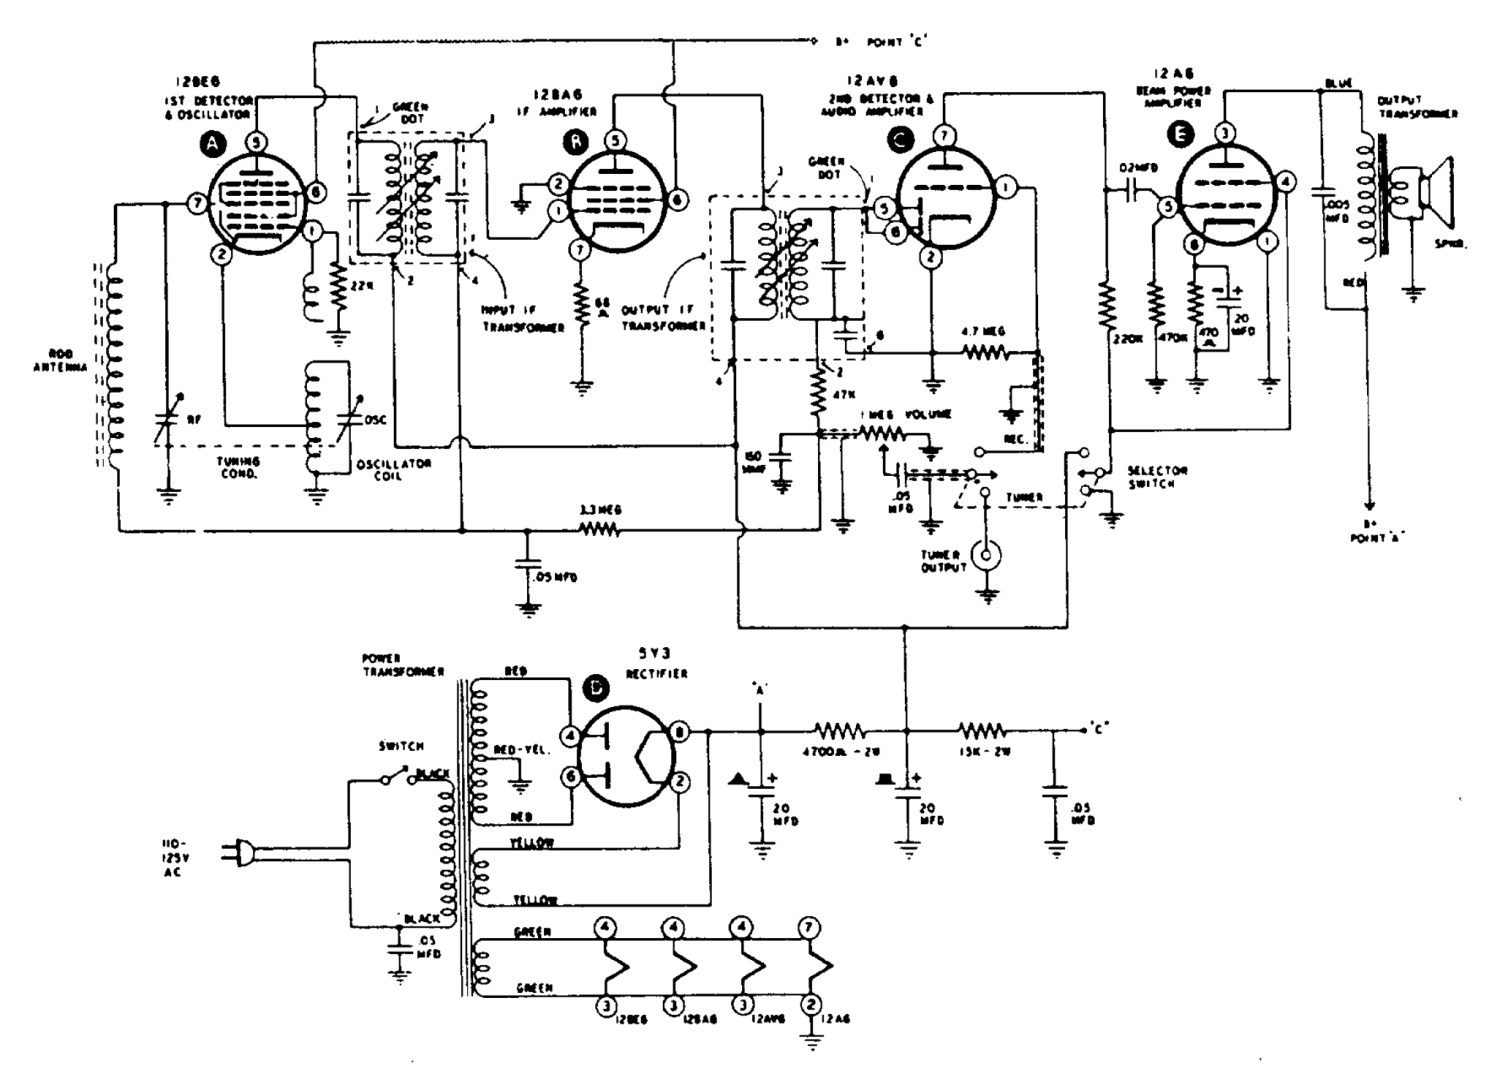 Heathkit BR-2M Broadcast Receiver - Schematic Diagram